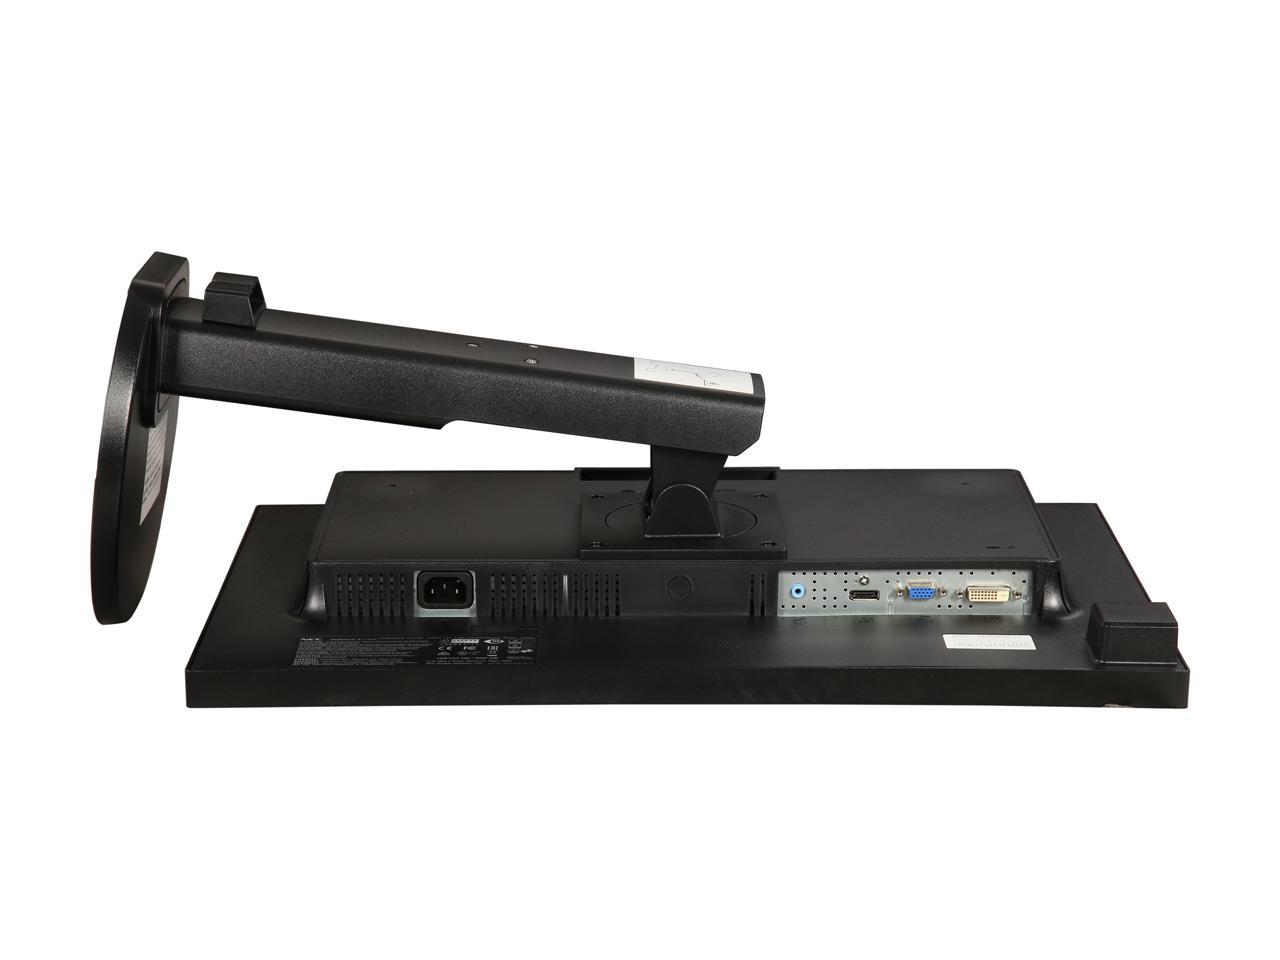 NEC 23" MultiSync E233WM - LED Business monitor